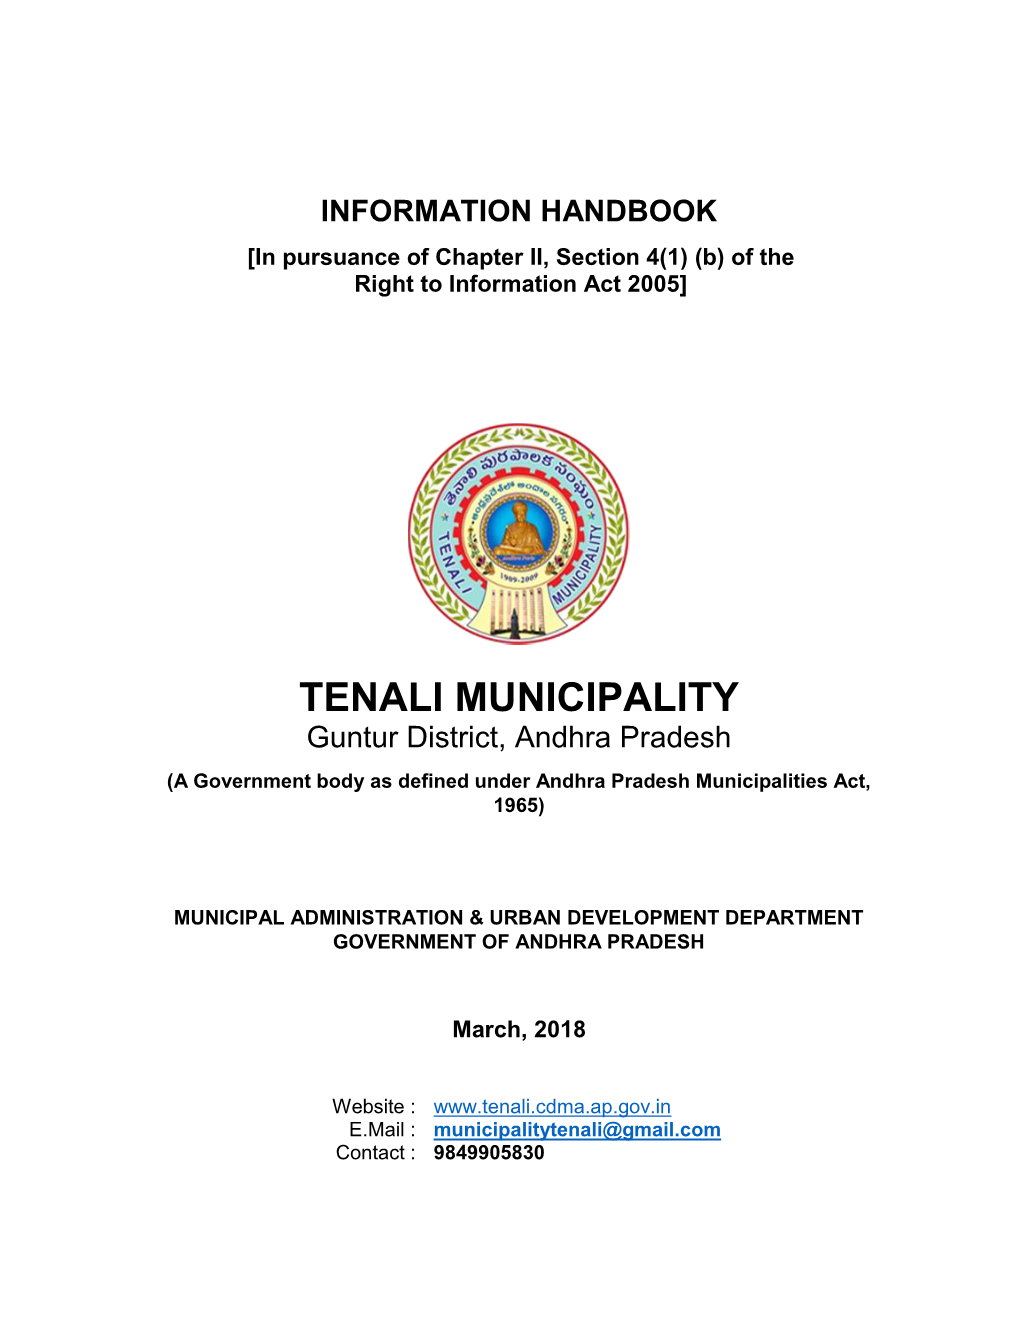 TENALI MUNICIPALITY Guntur District, Andhra Pradesh (A Government Body As Defined Under Andhra Pradesh Municipalities Act, 1965)